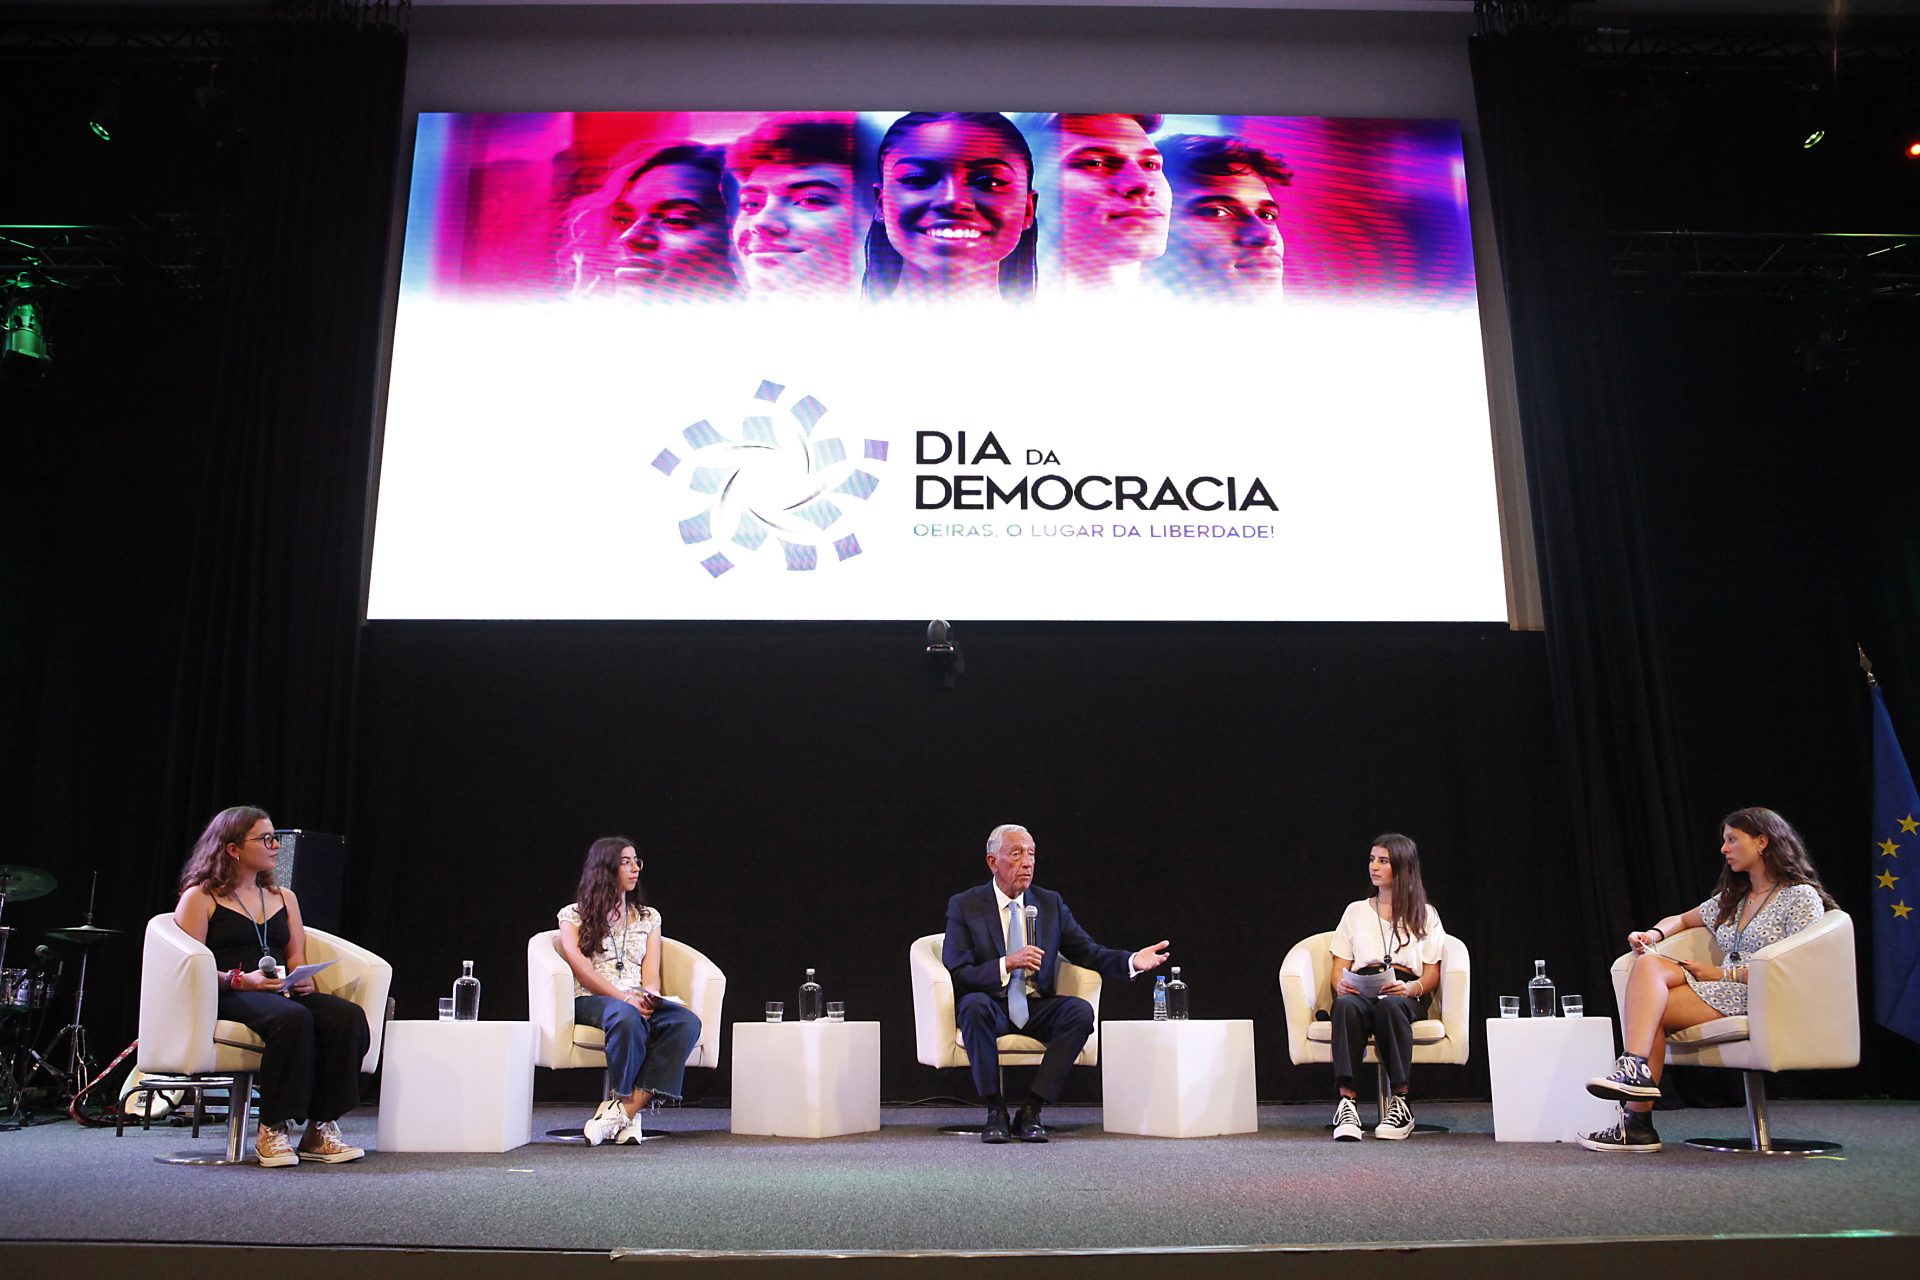 Presidente da República conversa com alunos de Oeiras sobre “Dia da Democracia”